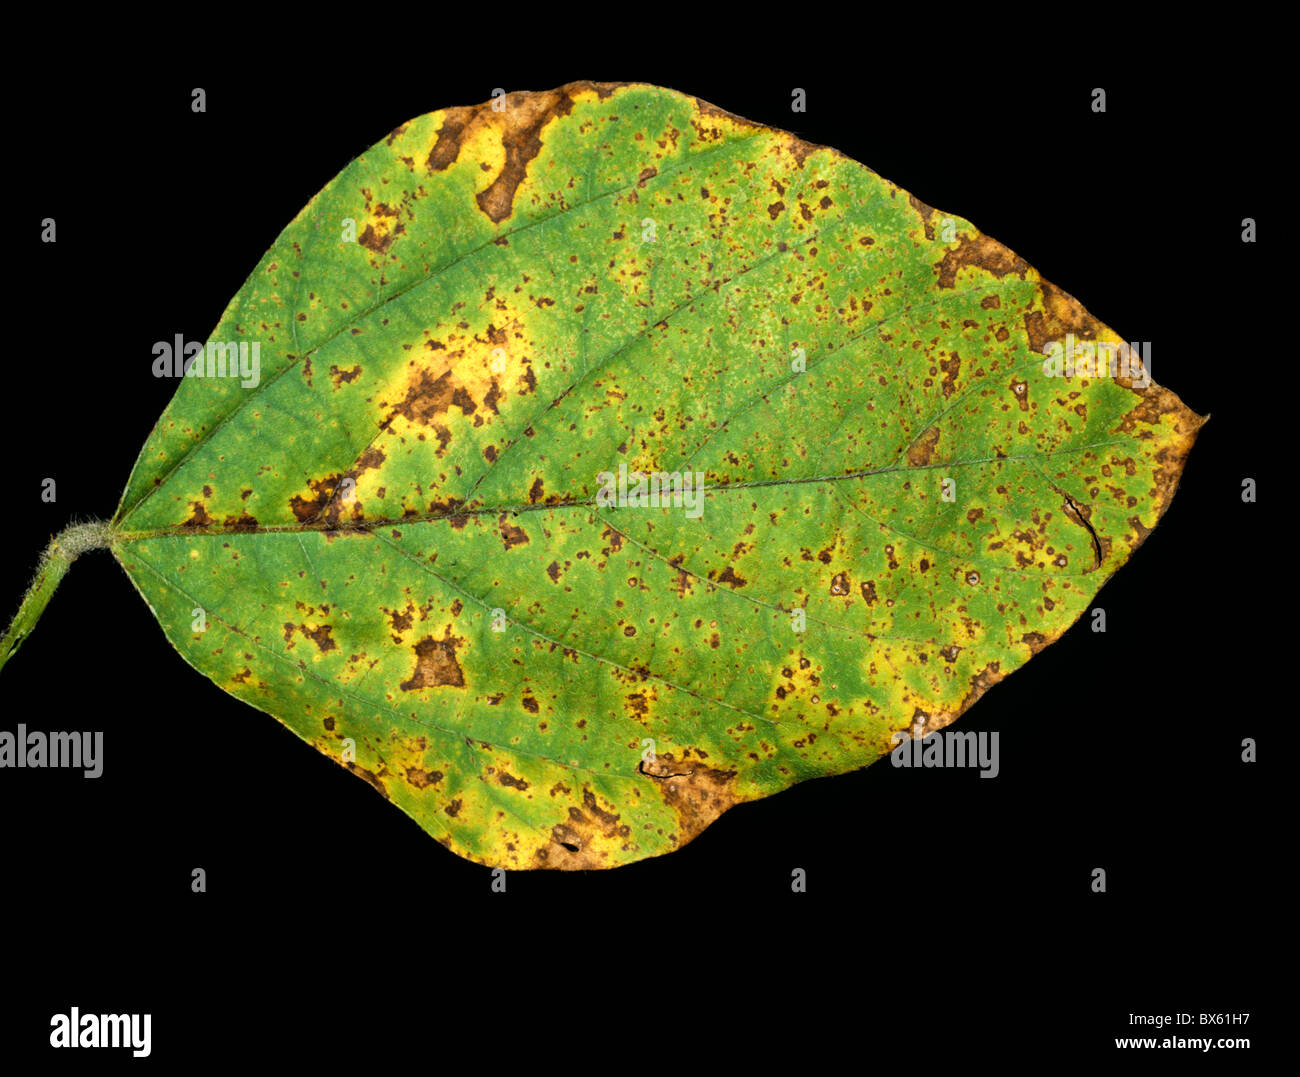 Bacterial blight (Pseudomonas syringae pv glycinea) on soya bean leaf Stock Photo